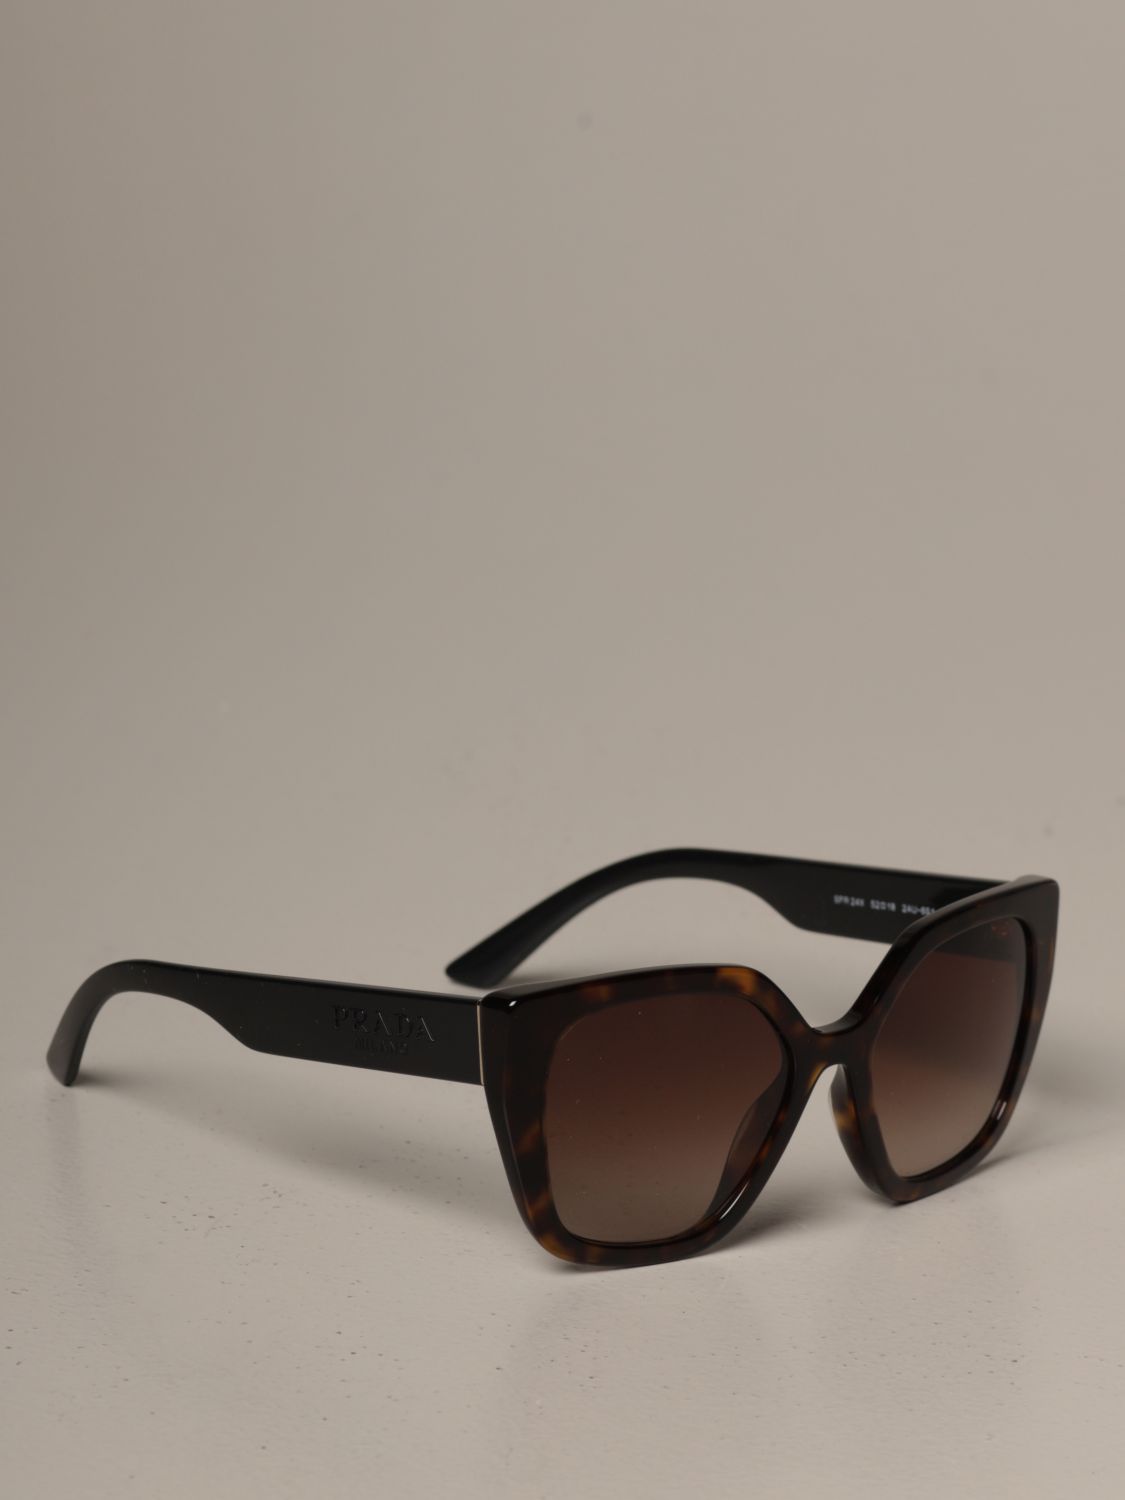 prada sunglasses models